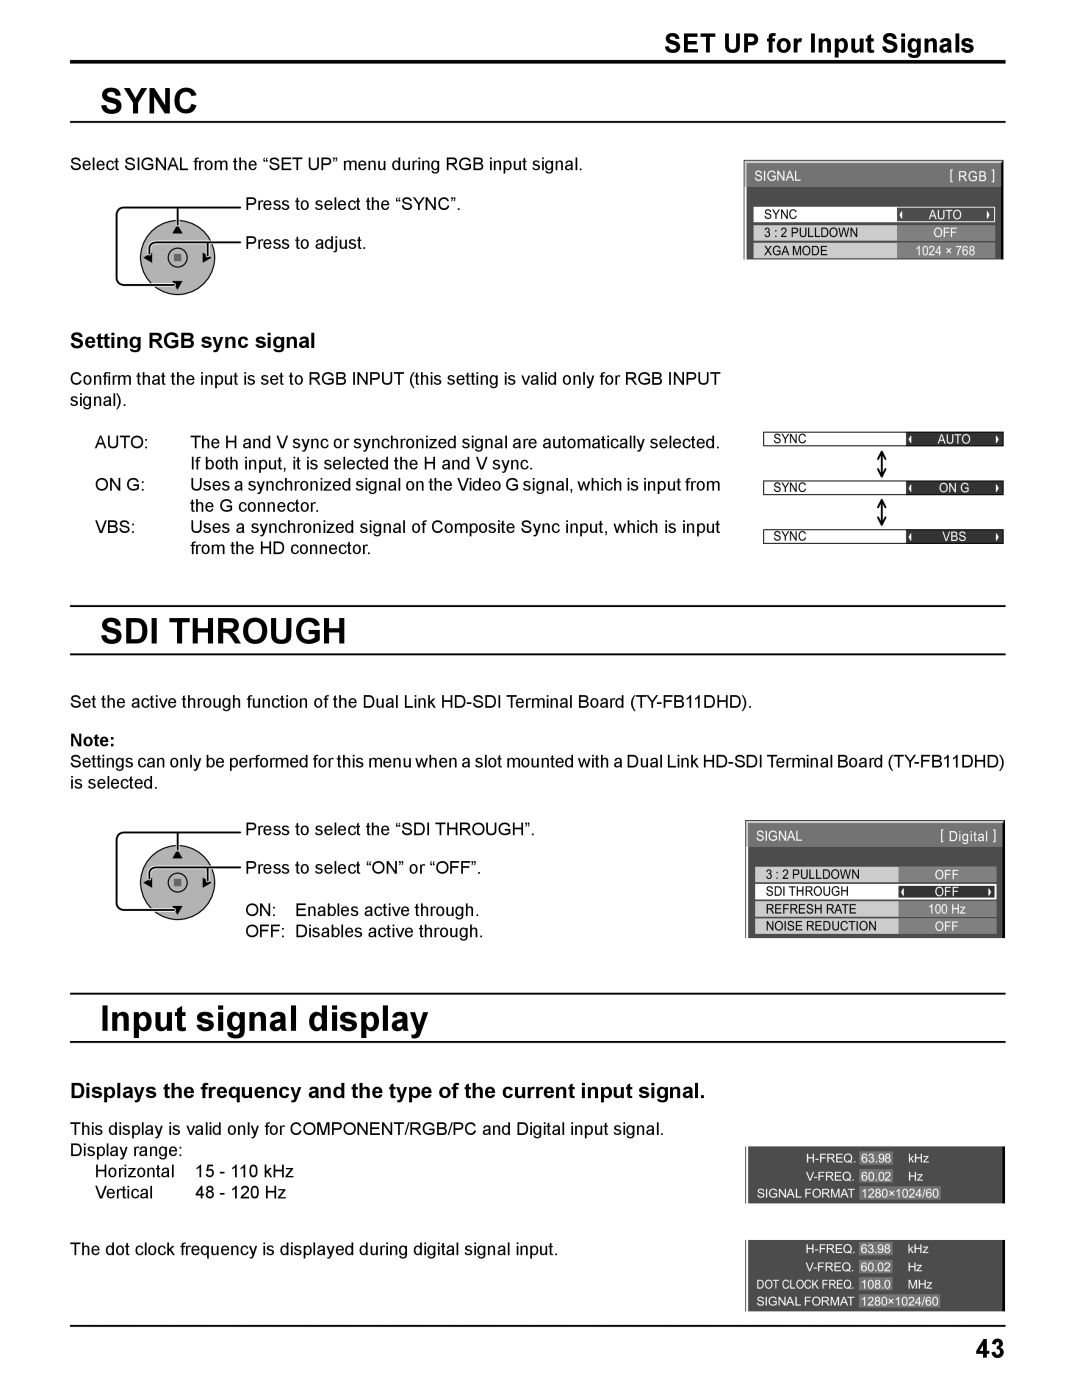 Panasonic TH-42PF11UK manual Sync, Sdi Through, Input signal display, Setting RGB sync signal, SET UP for Input Signals 